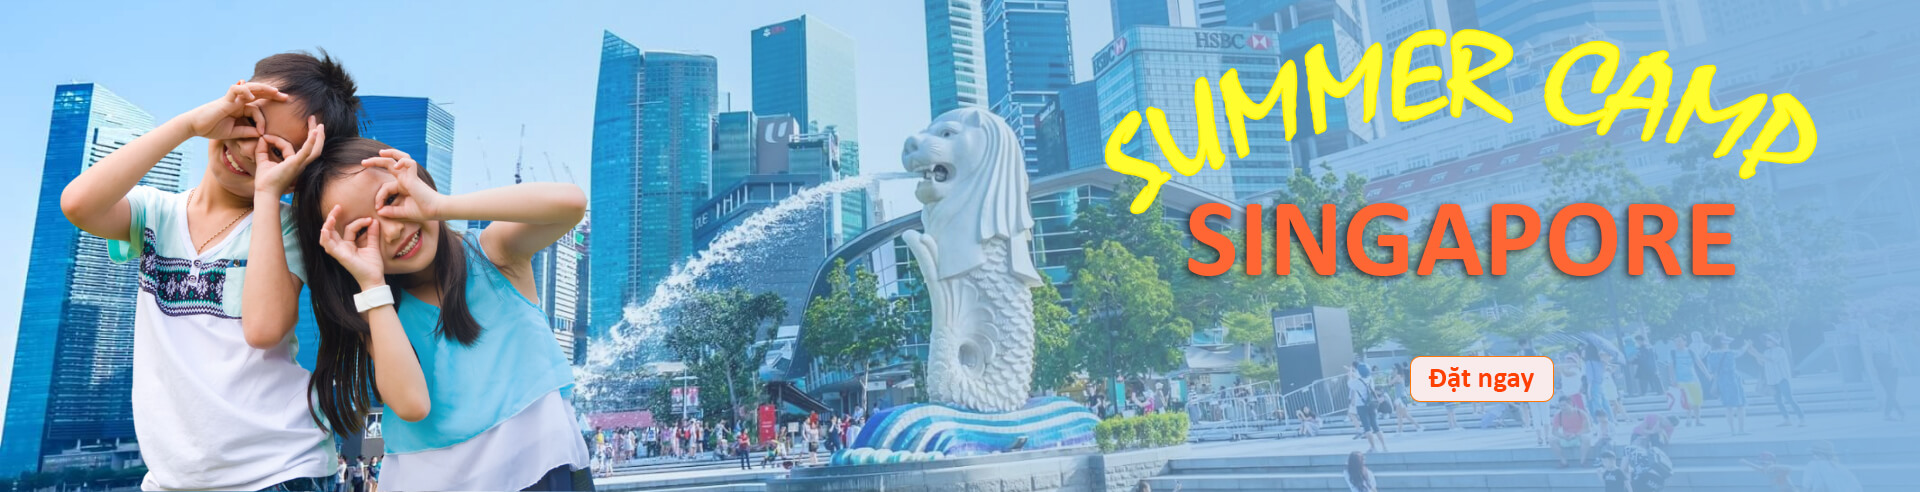 Tour singapore summer camp 2022 